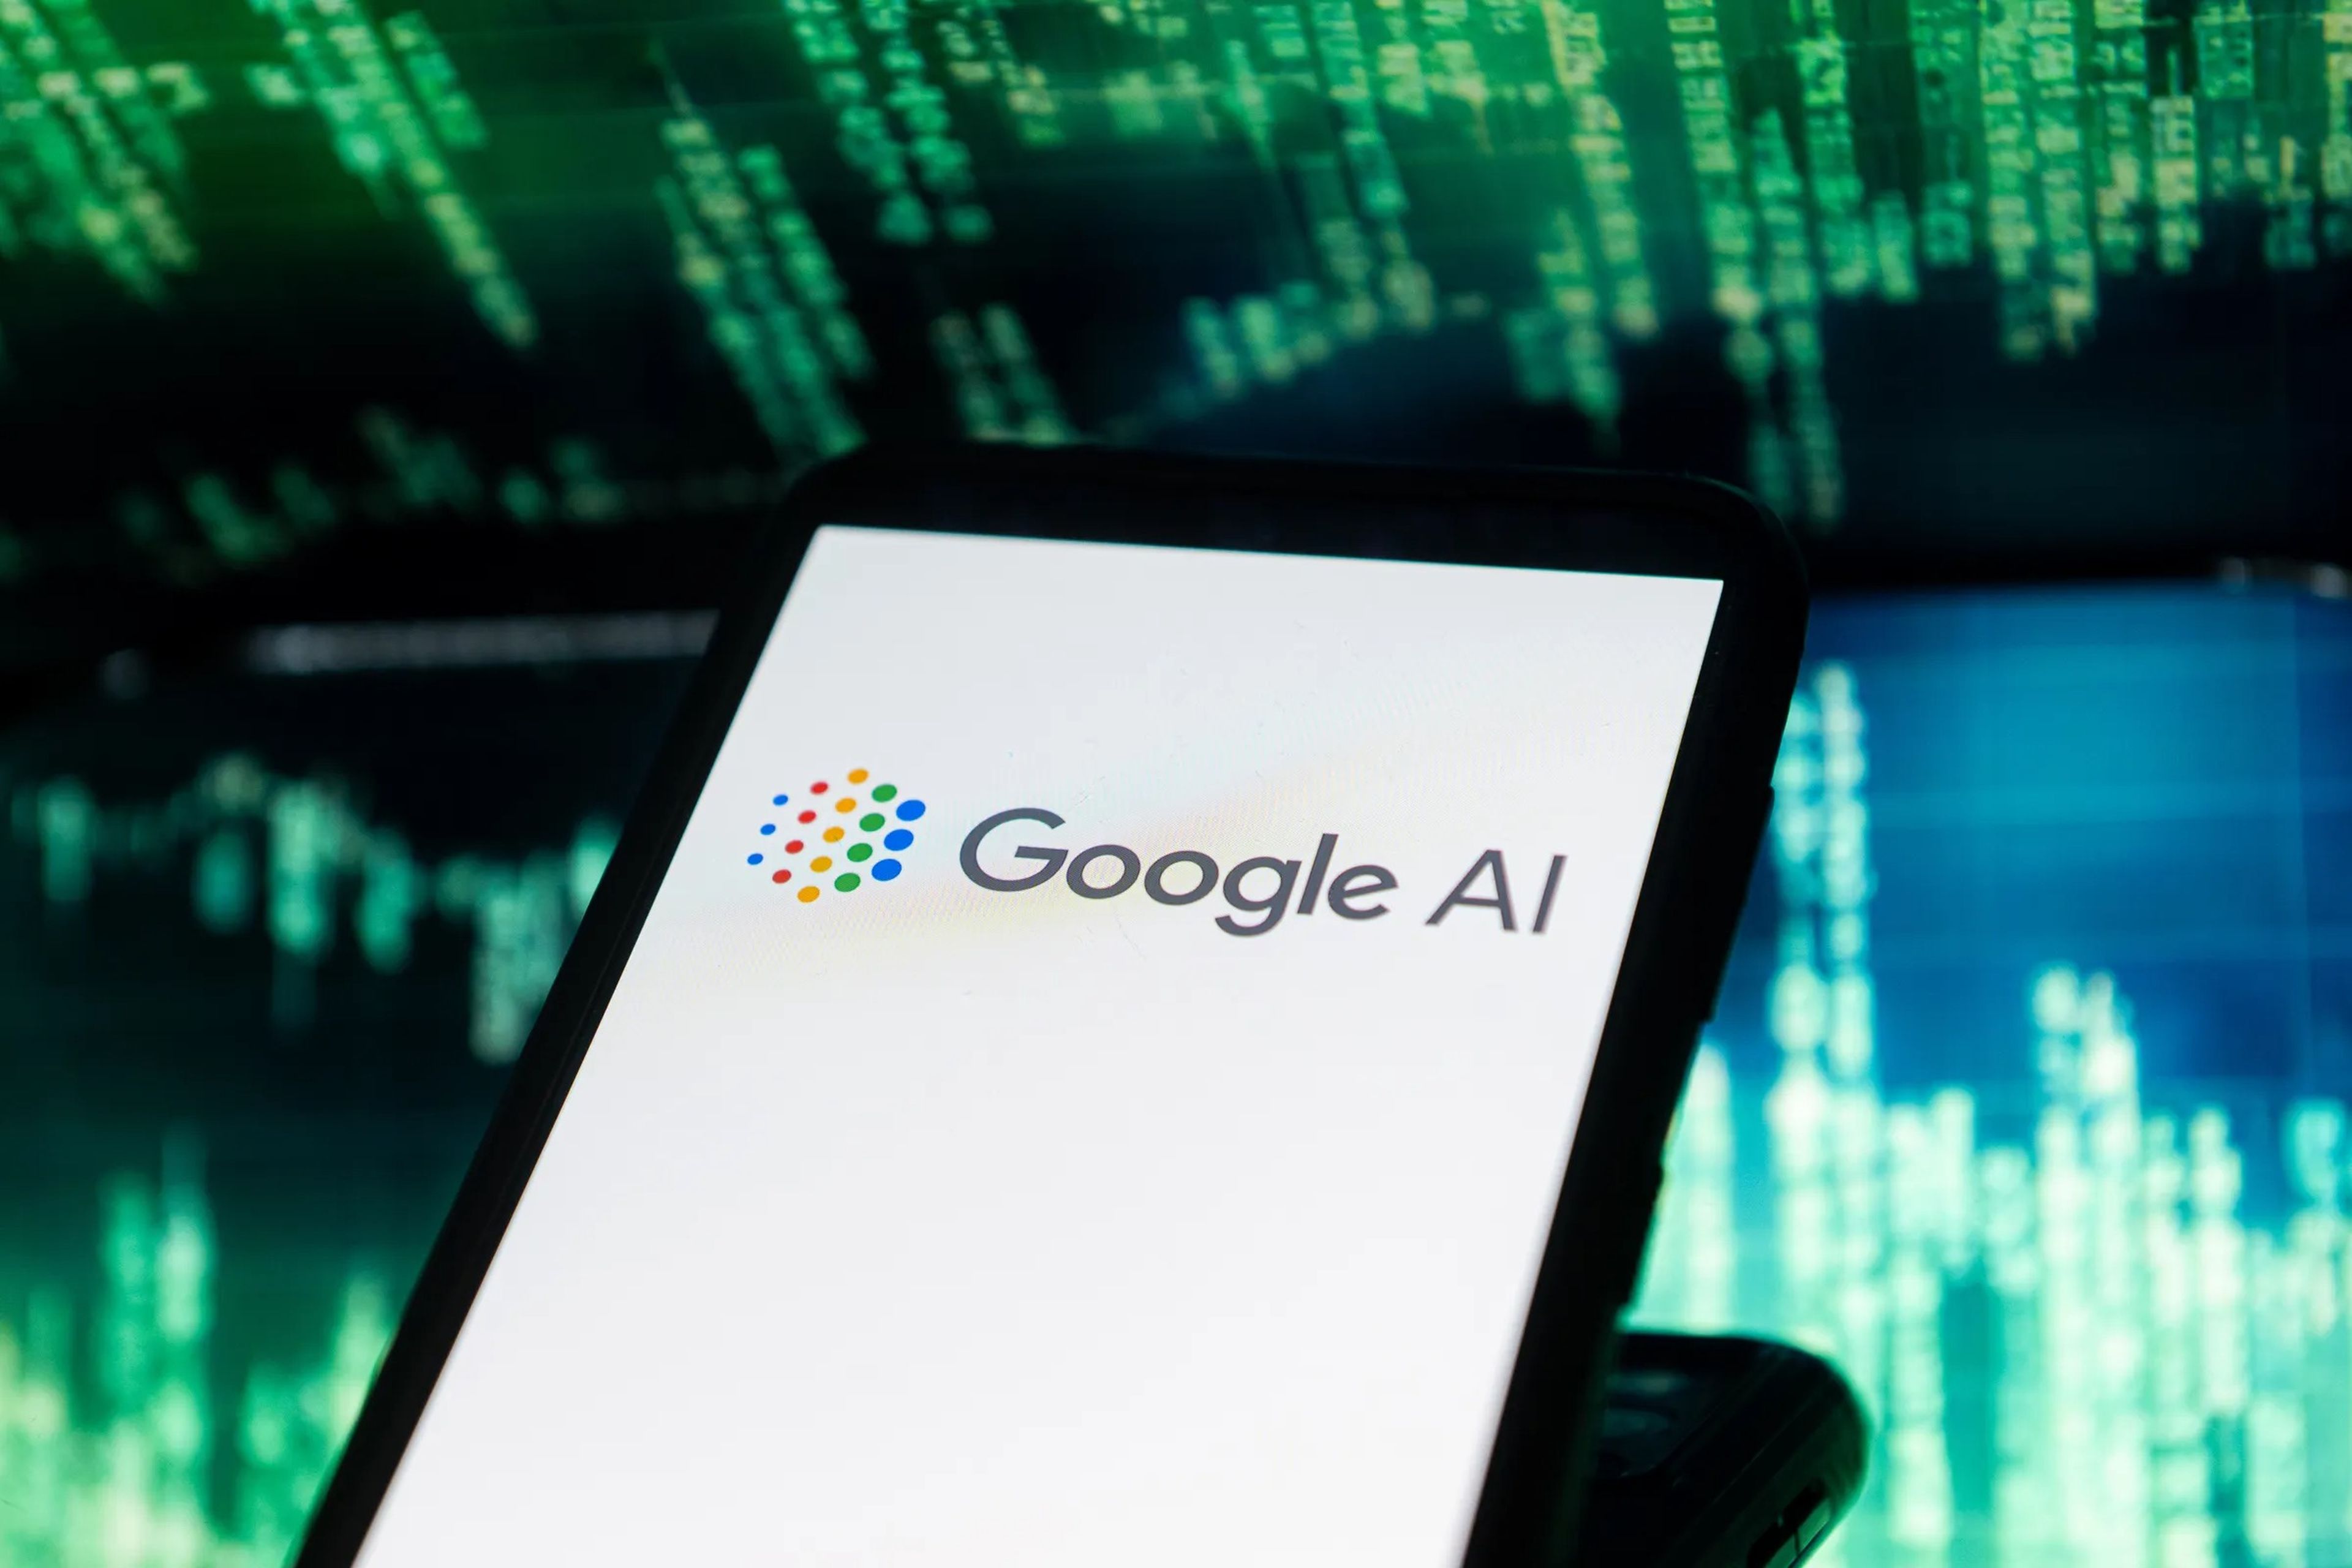 Logo de Google AI en la pantalla de un teléfono móvil.